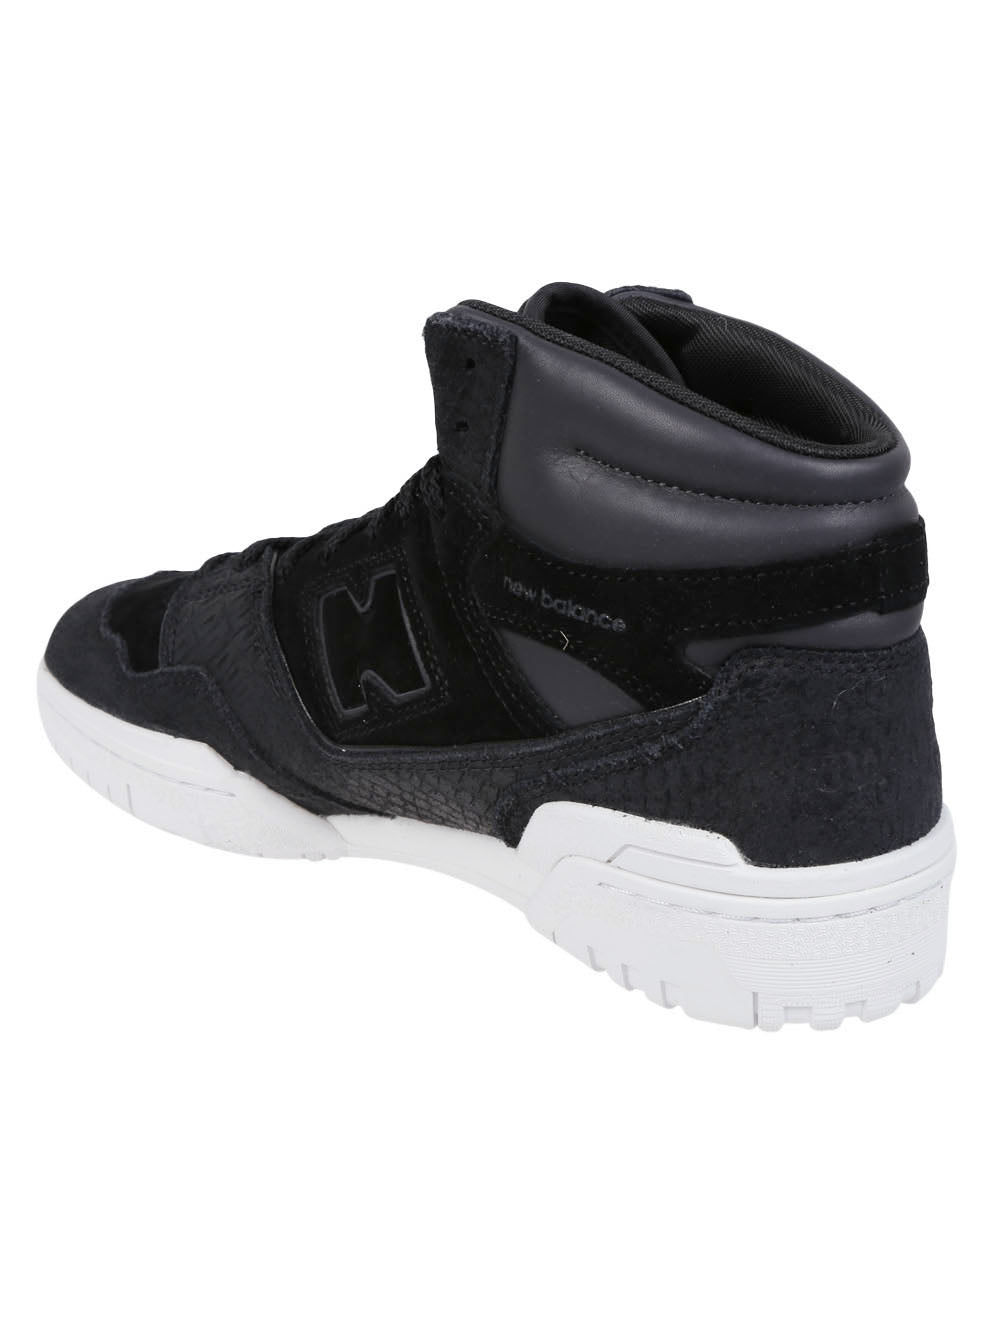 Junya Watanabe Man X New Balance Sneakers Black